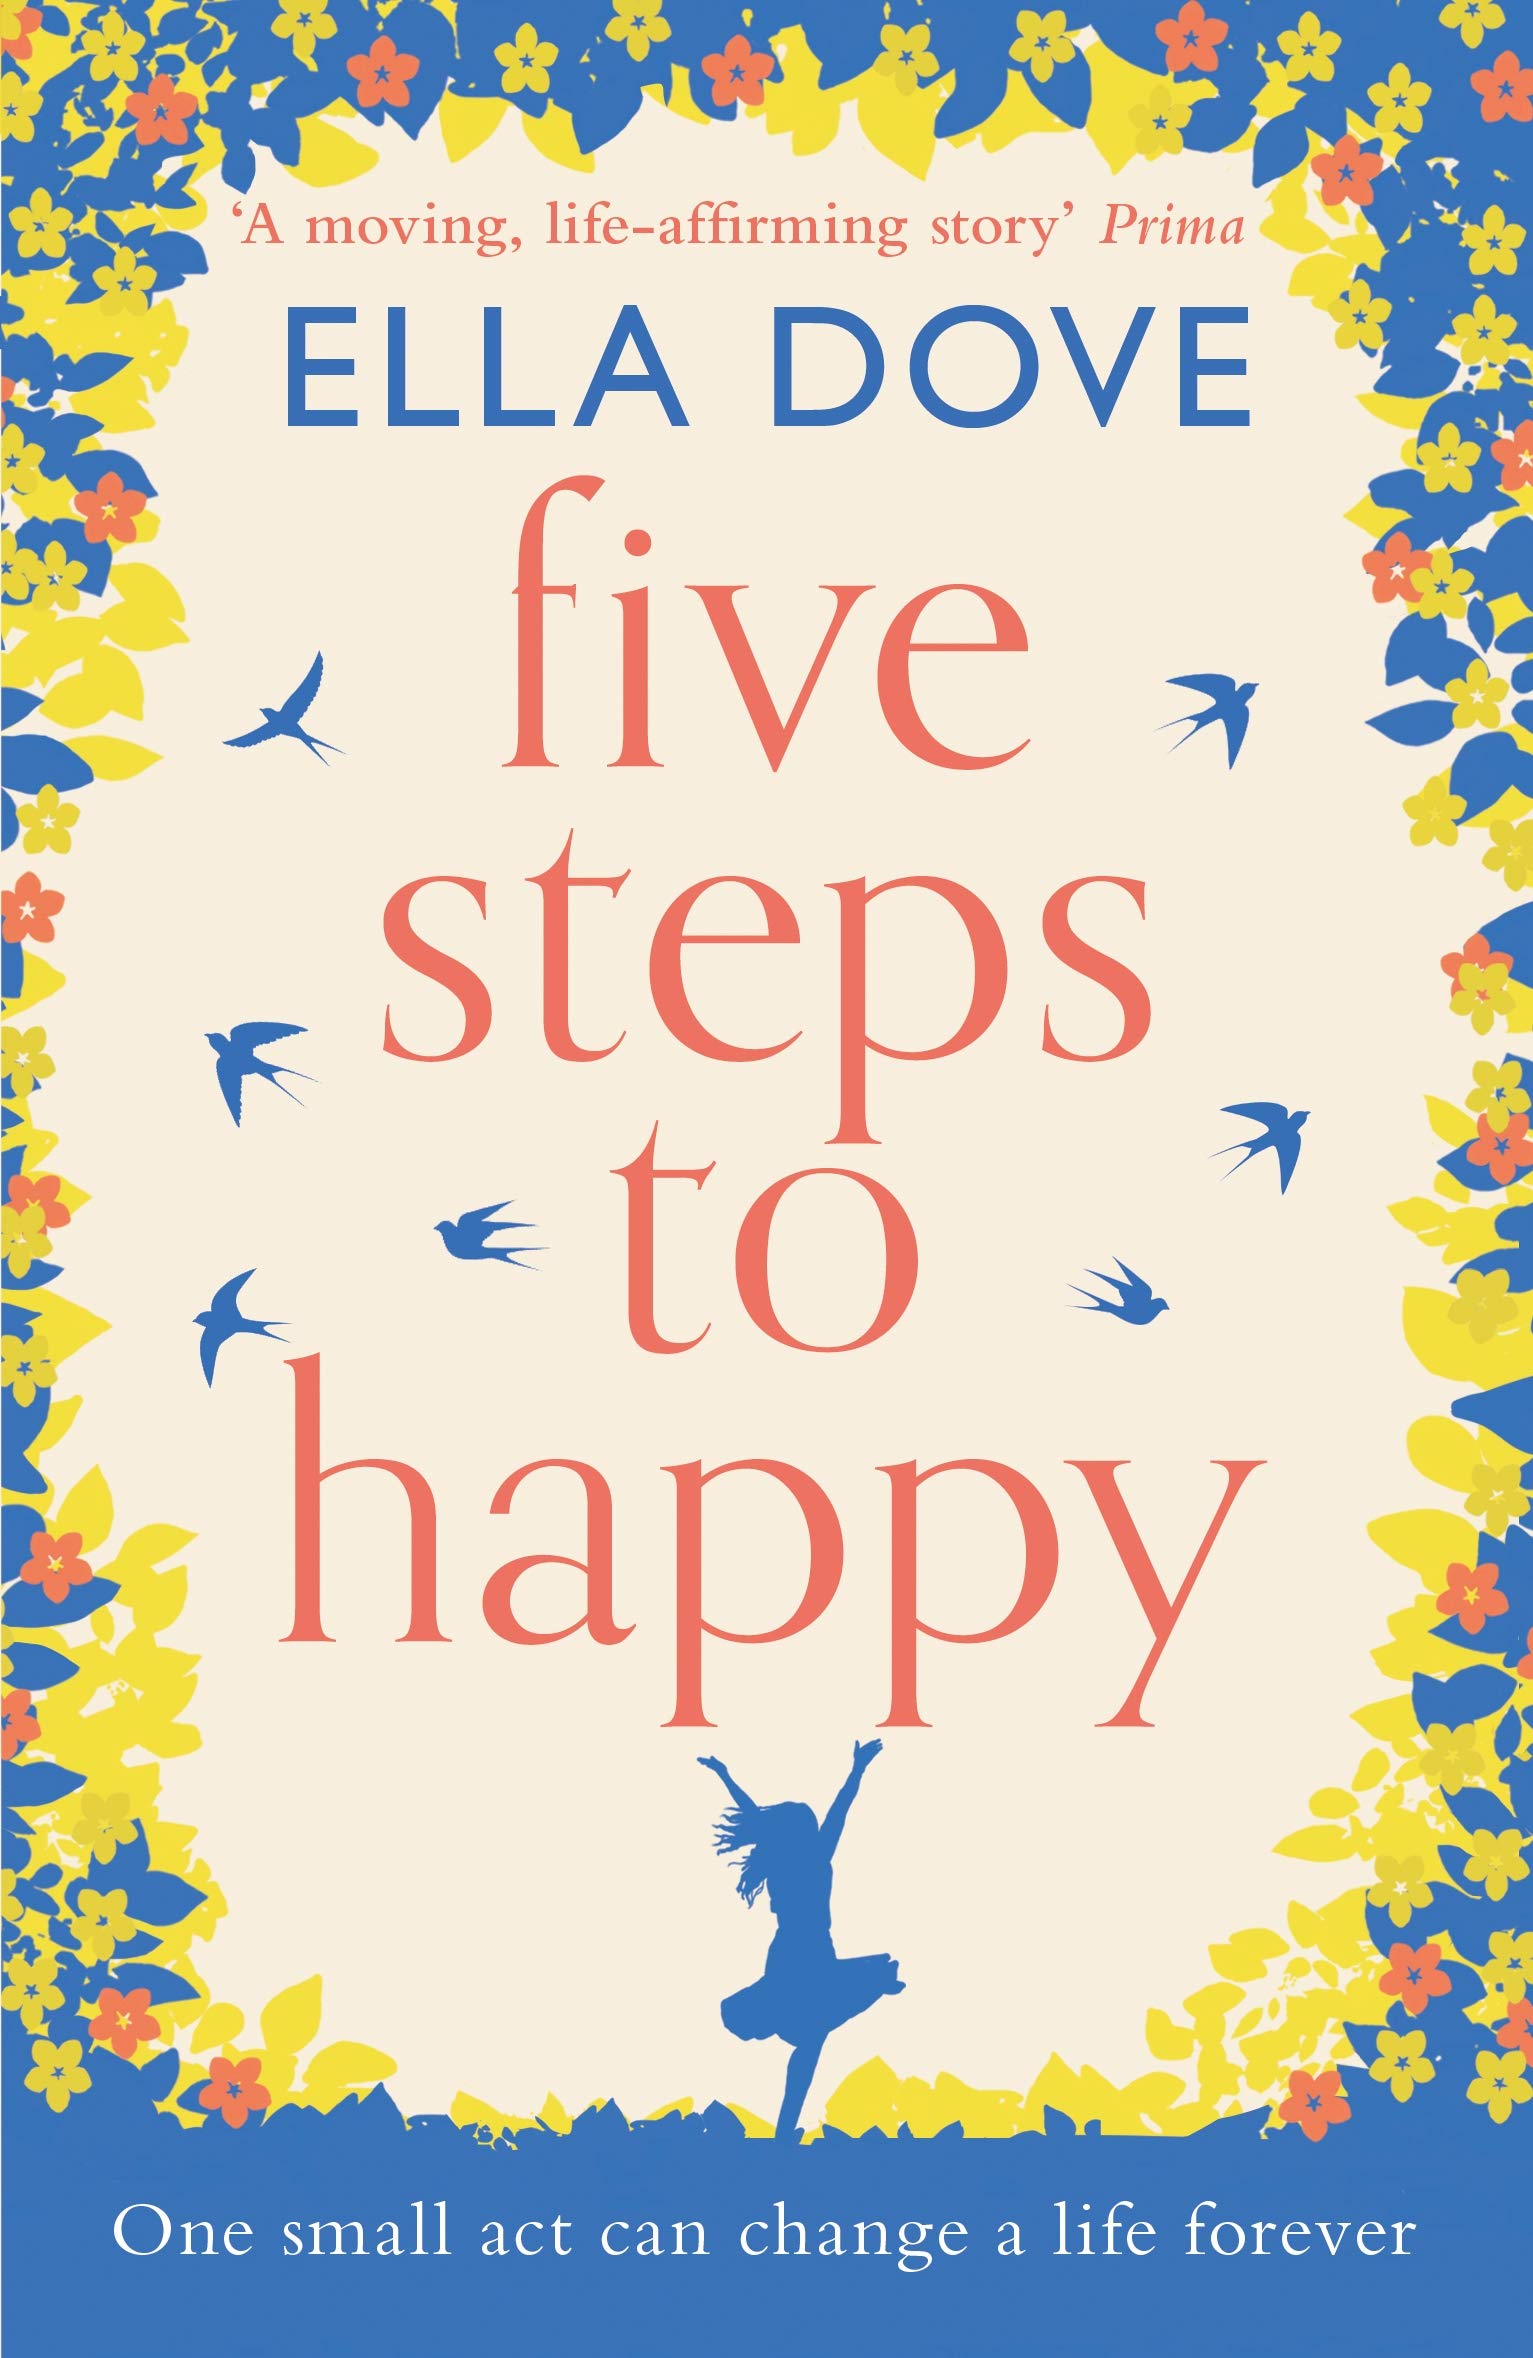 Five Steps to Happy | Ella Dove image15